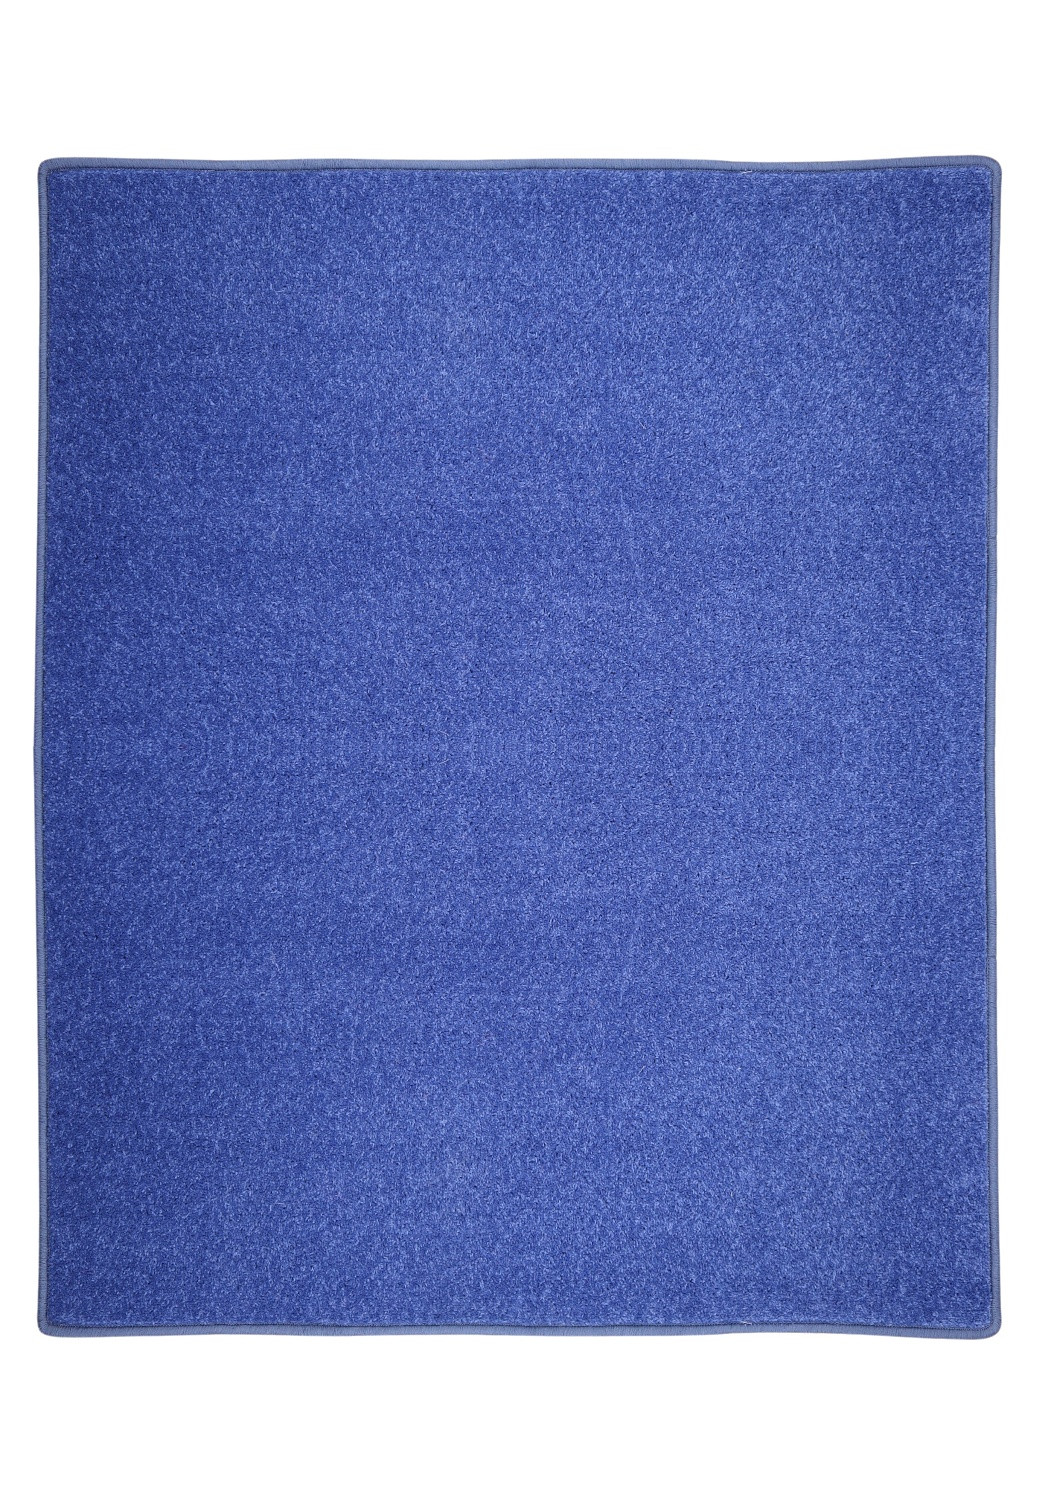 Kusový koberec Eton modrý 82 - 50x80 cm Vopi koberce 